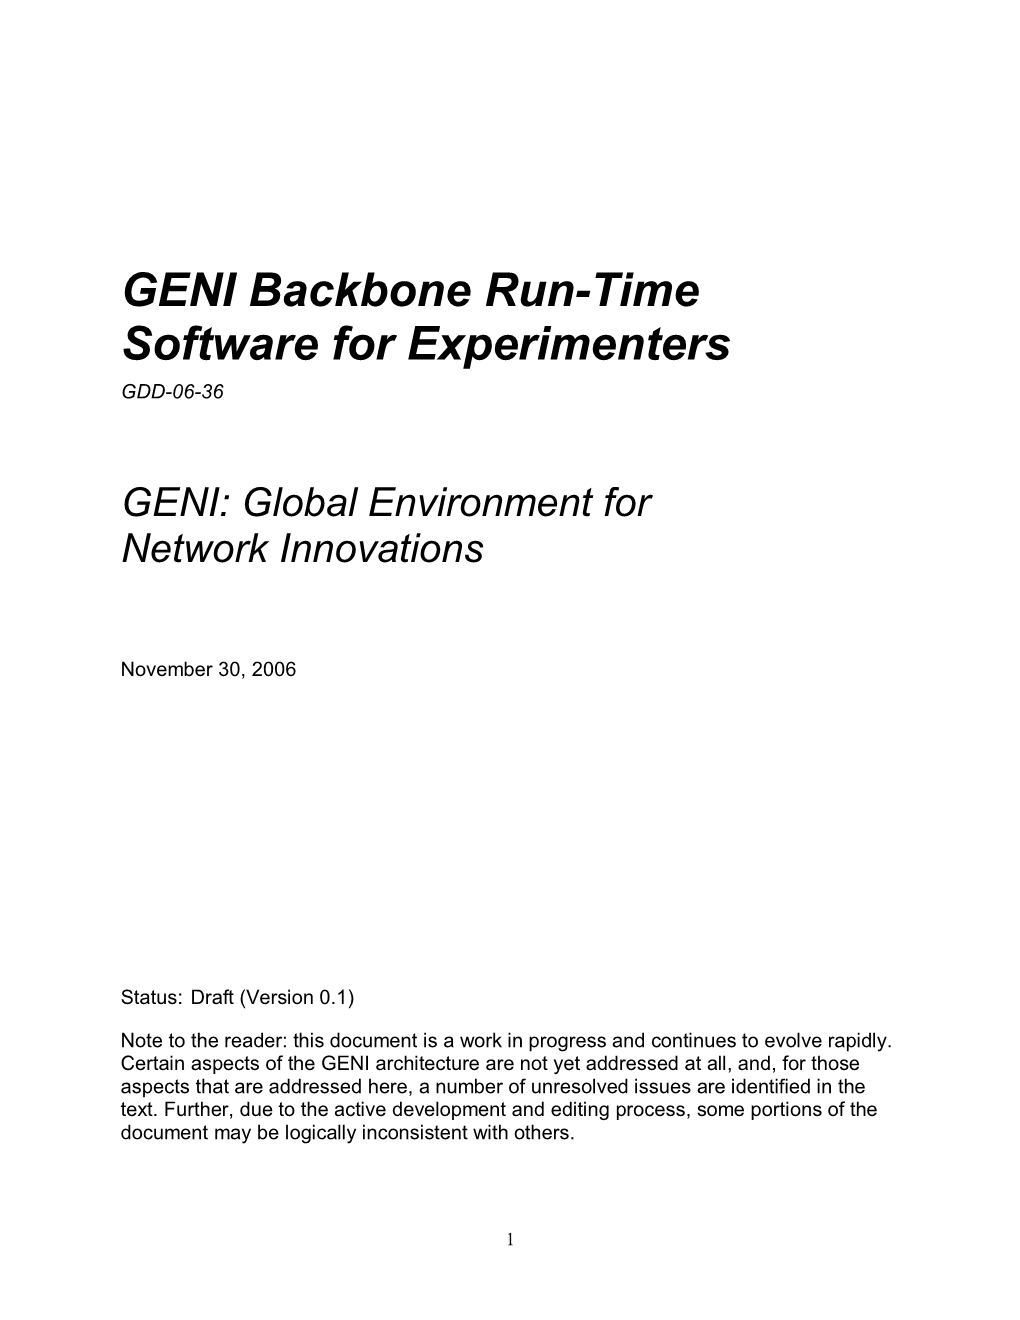 GENI Backbone Run-Time Software for Experimenters GDD-06-36